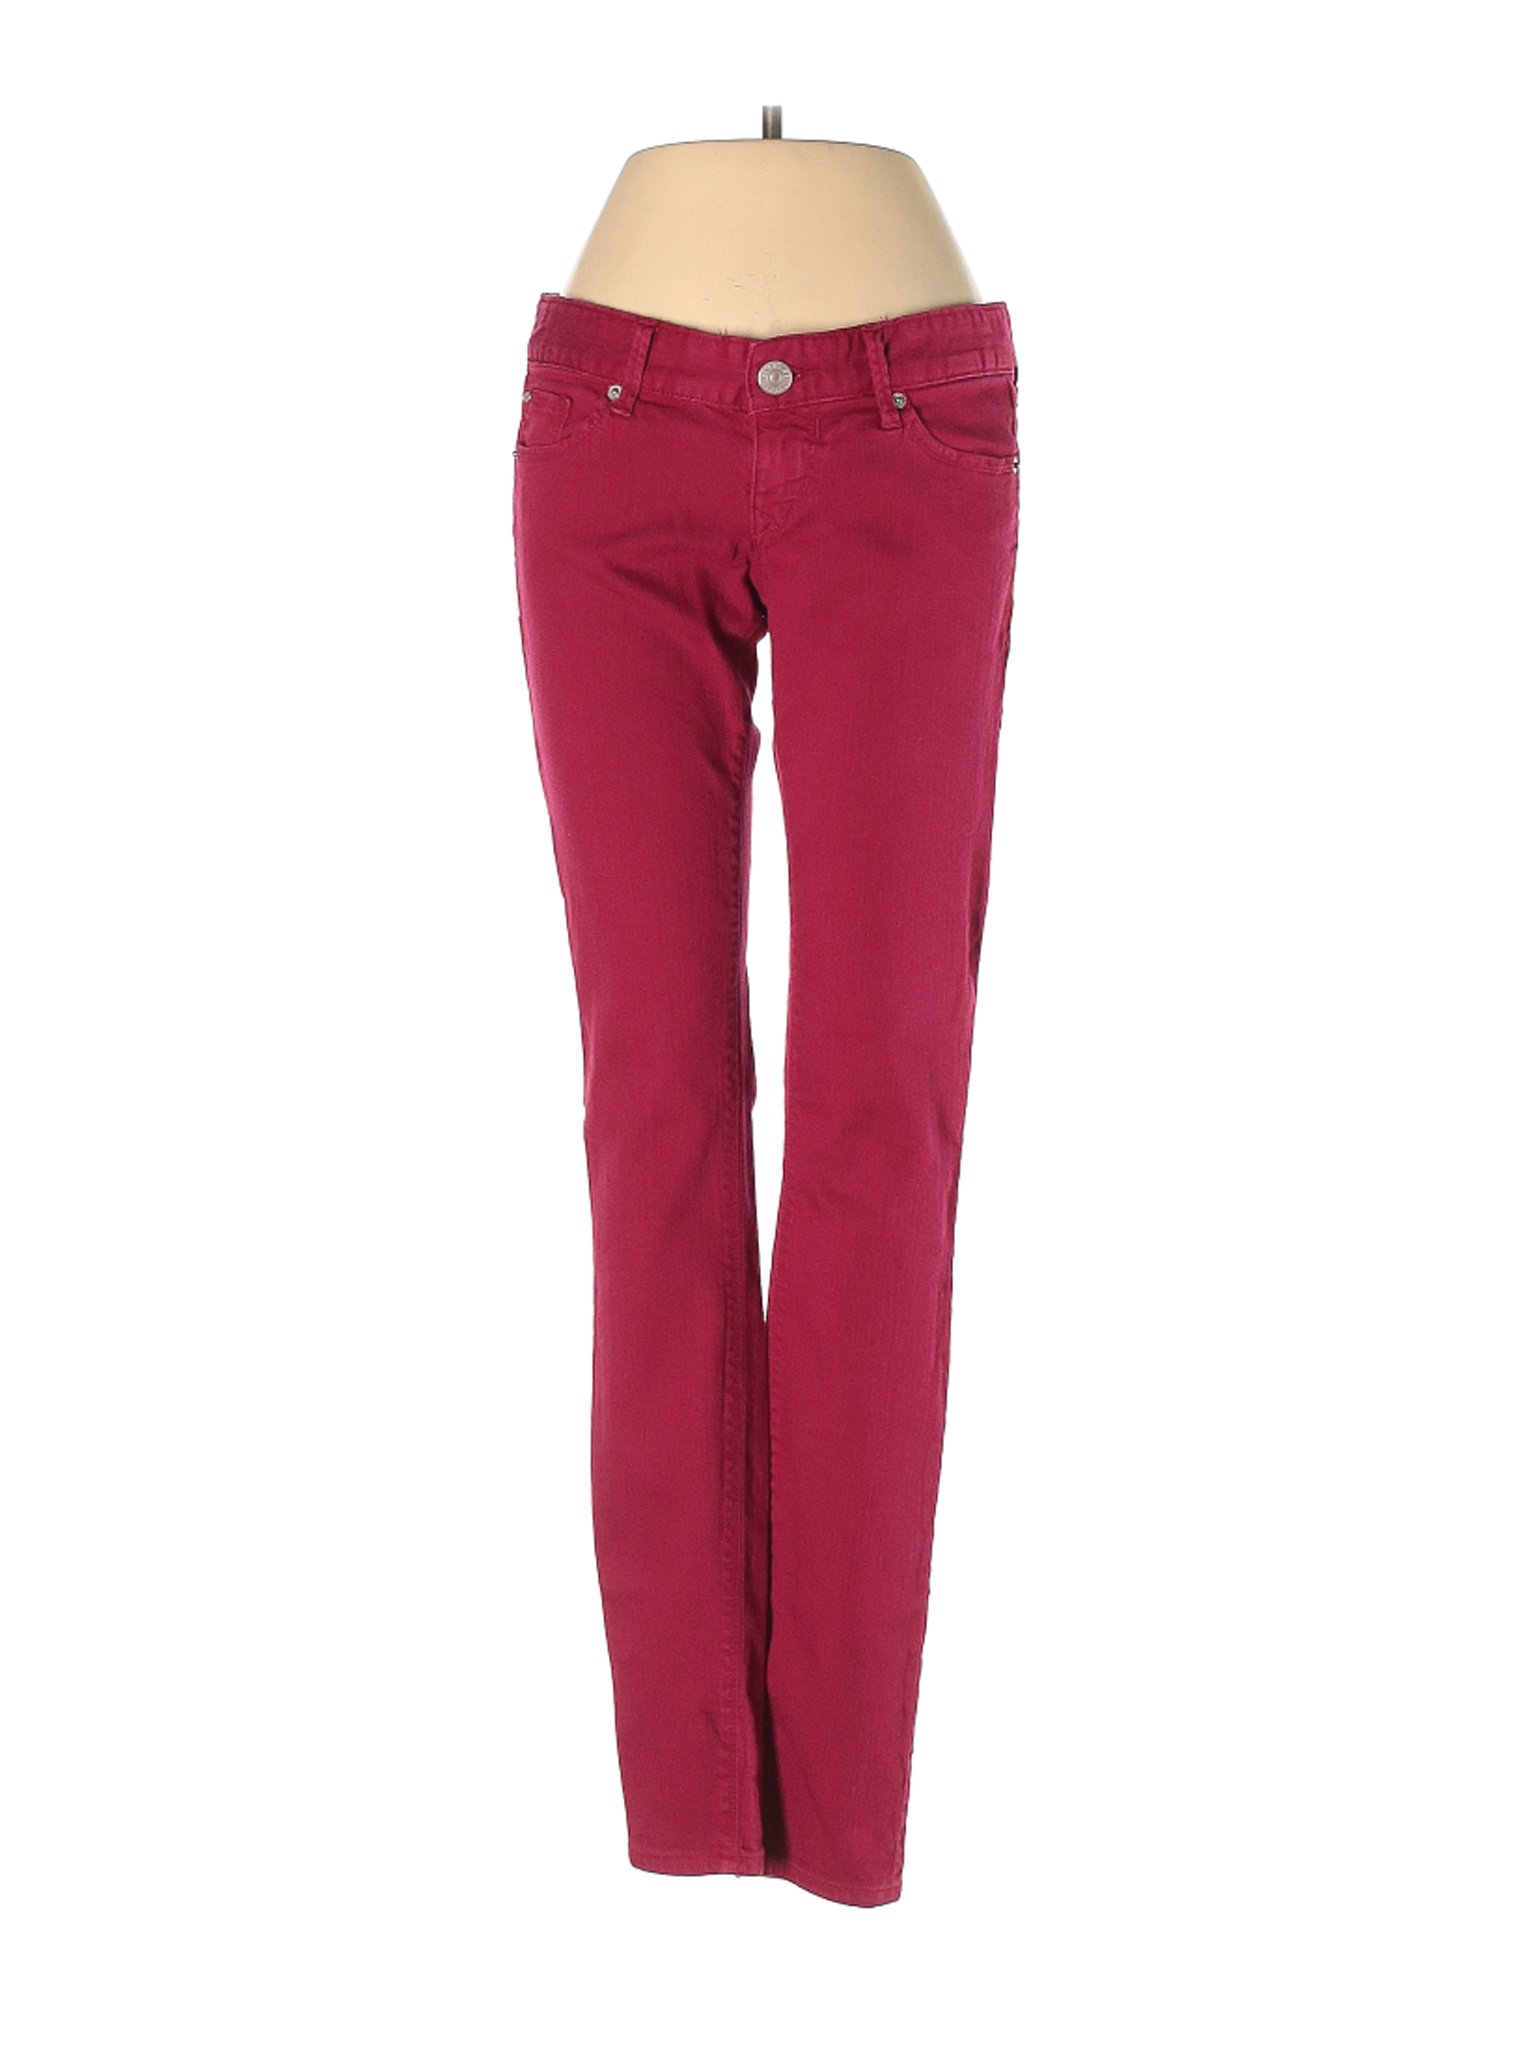 Express Women Red Jeans 2 | eBay